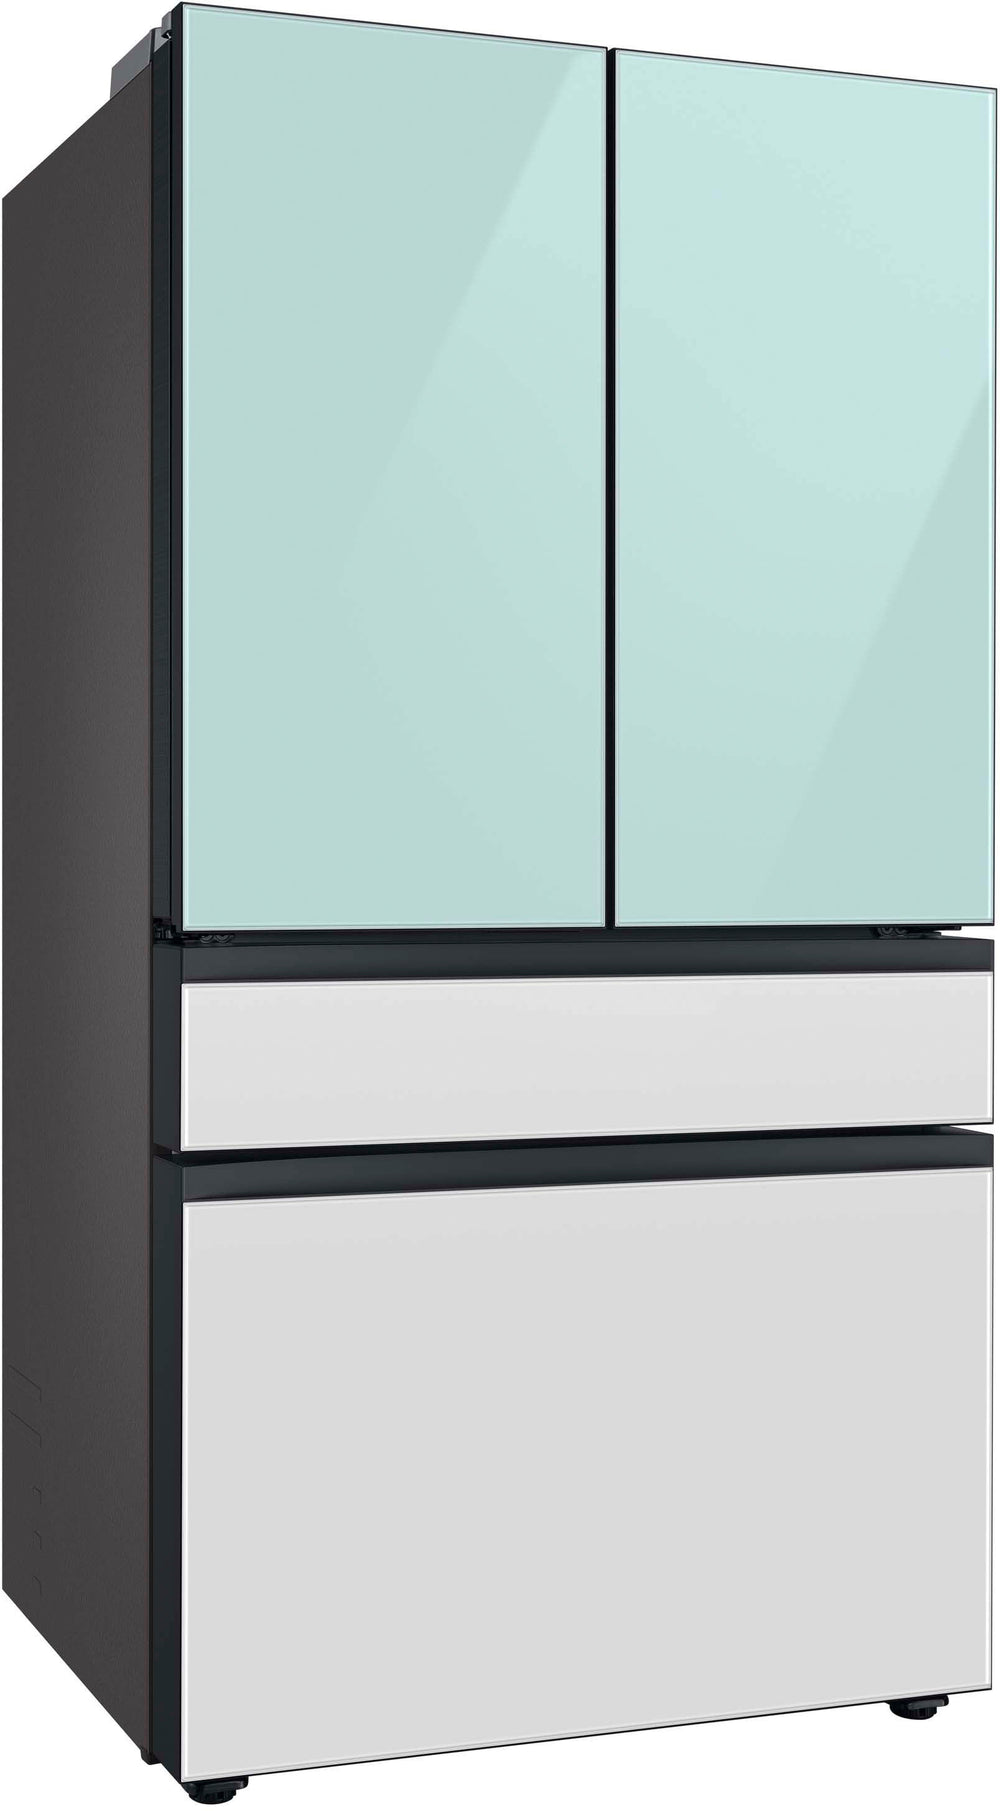 Samsung - Open Box BESPOKE 29 cu. ft 4-Door French Door Refrigerator with Beverage Center - Morning Blue Glass_1